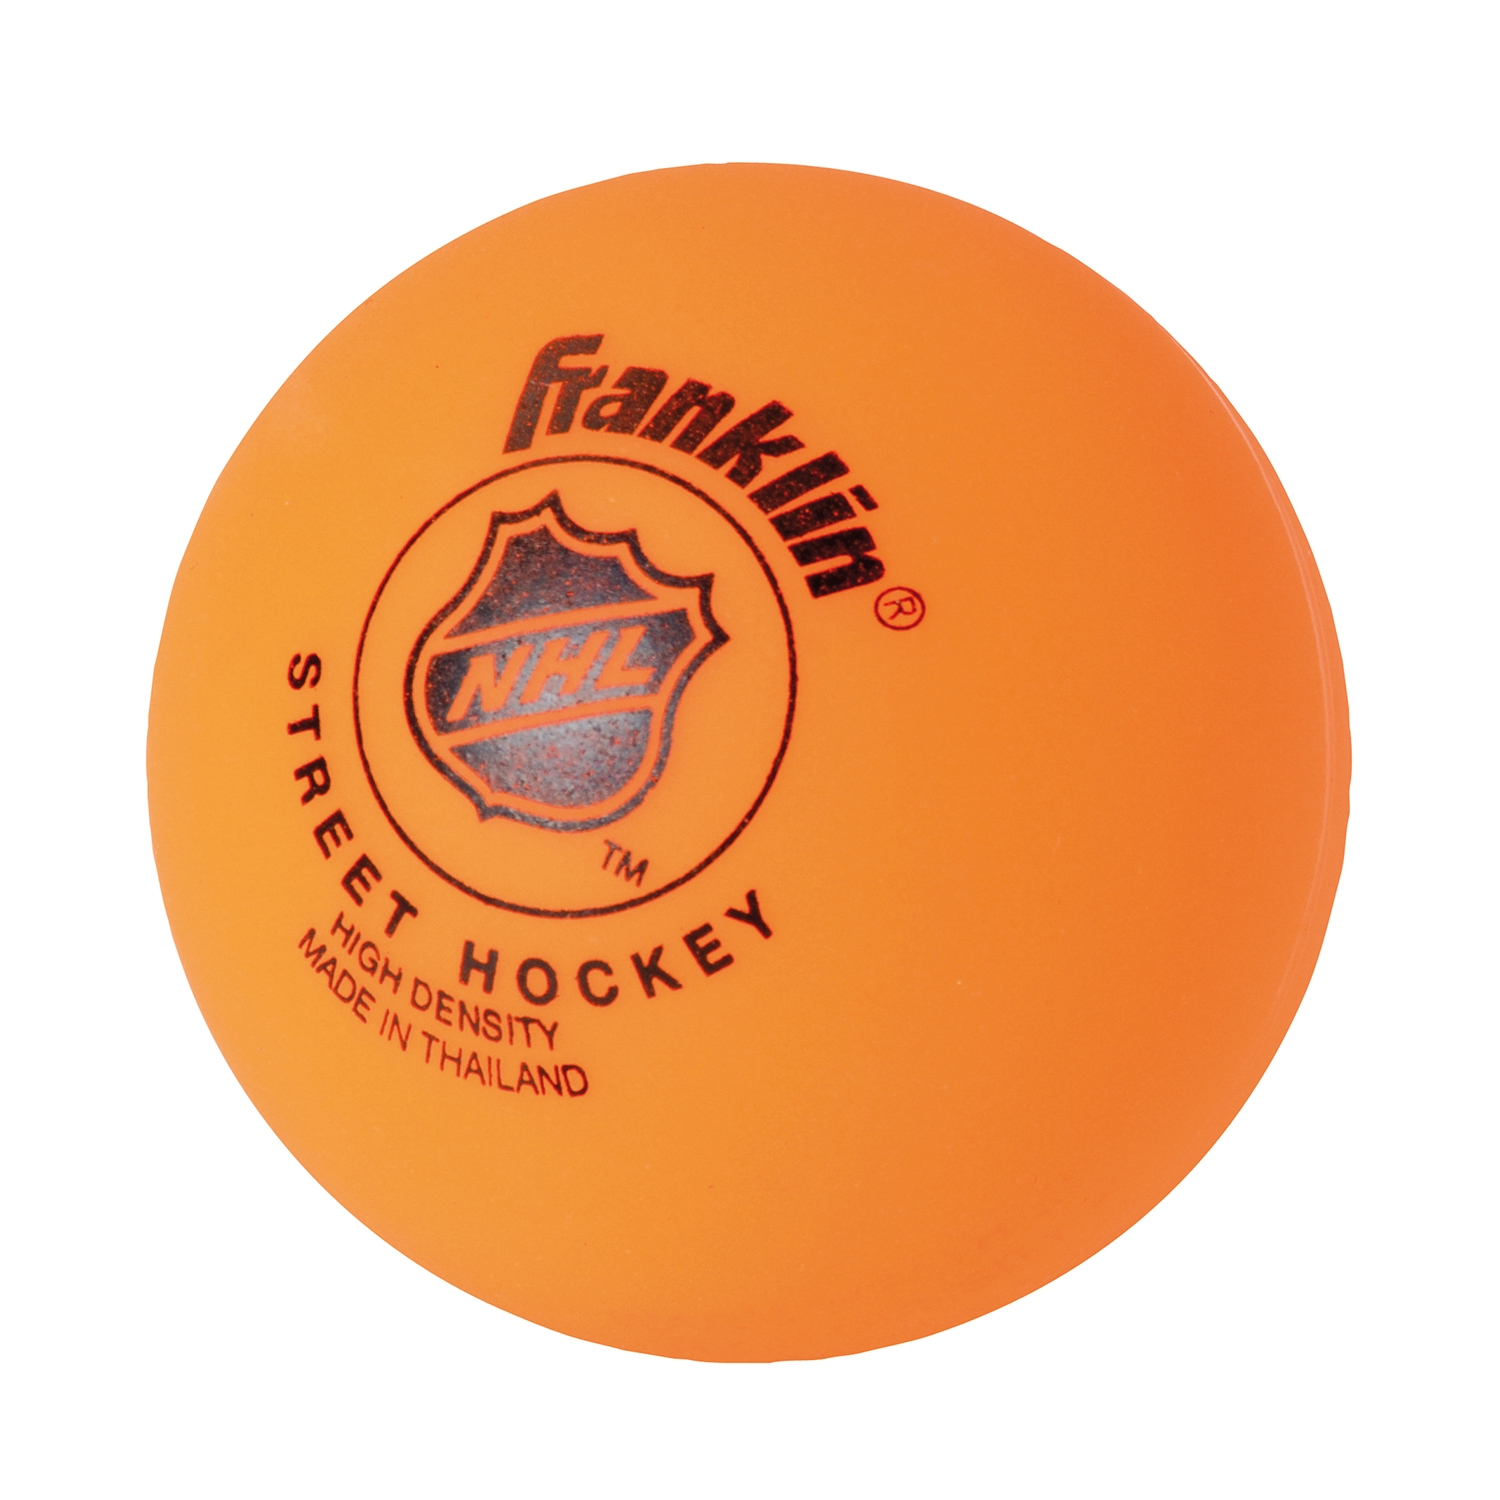 Franklin Streethockeyball High Density orange